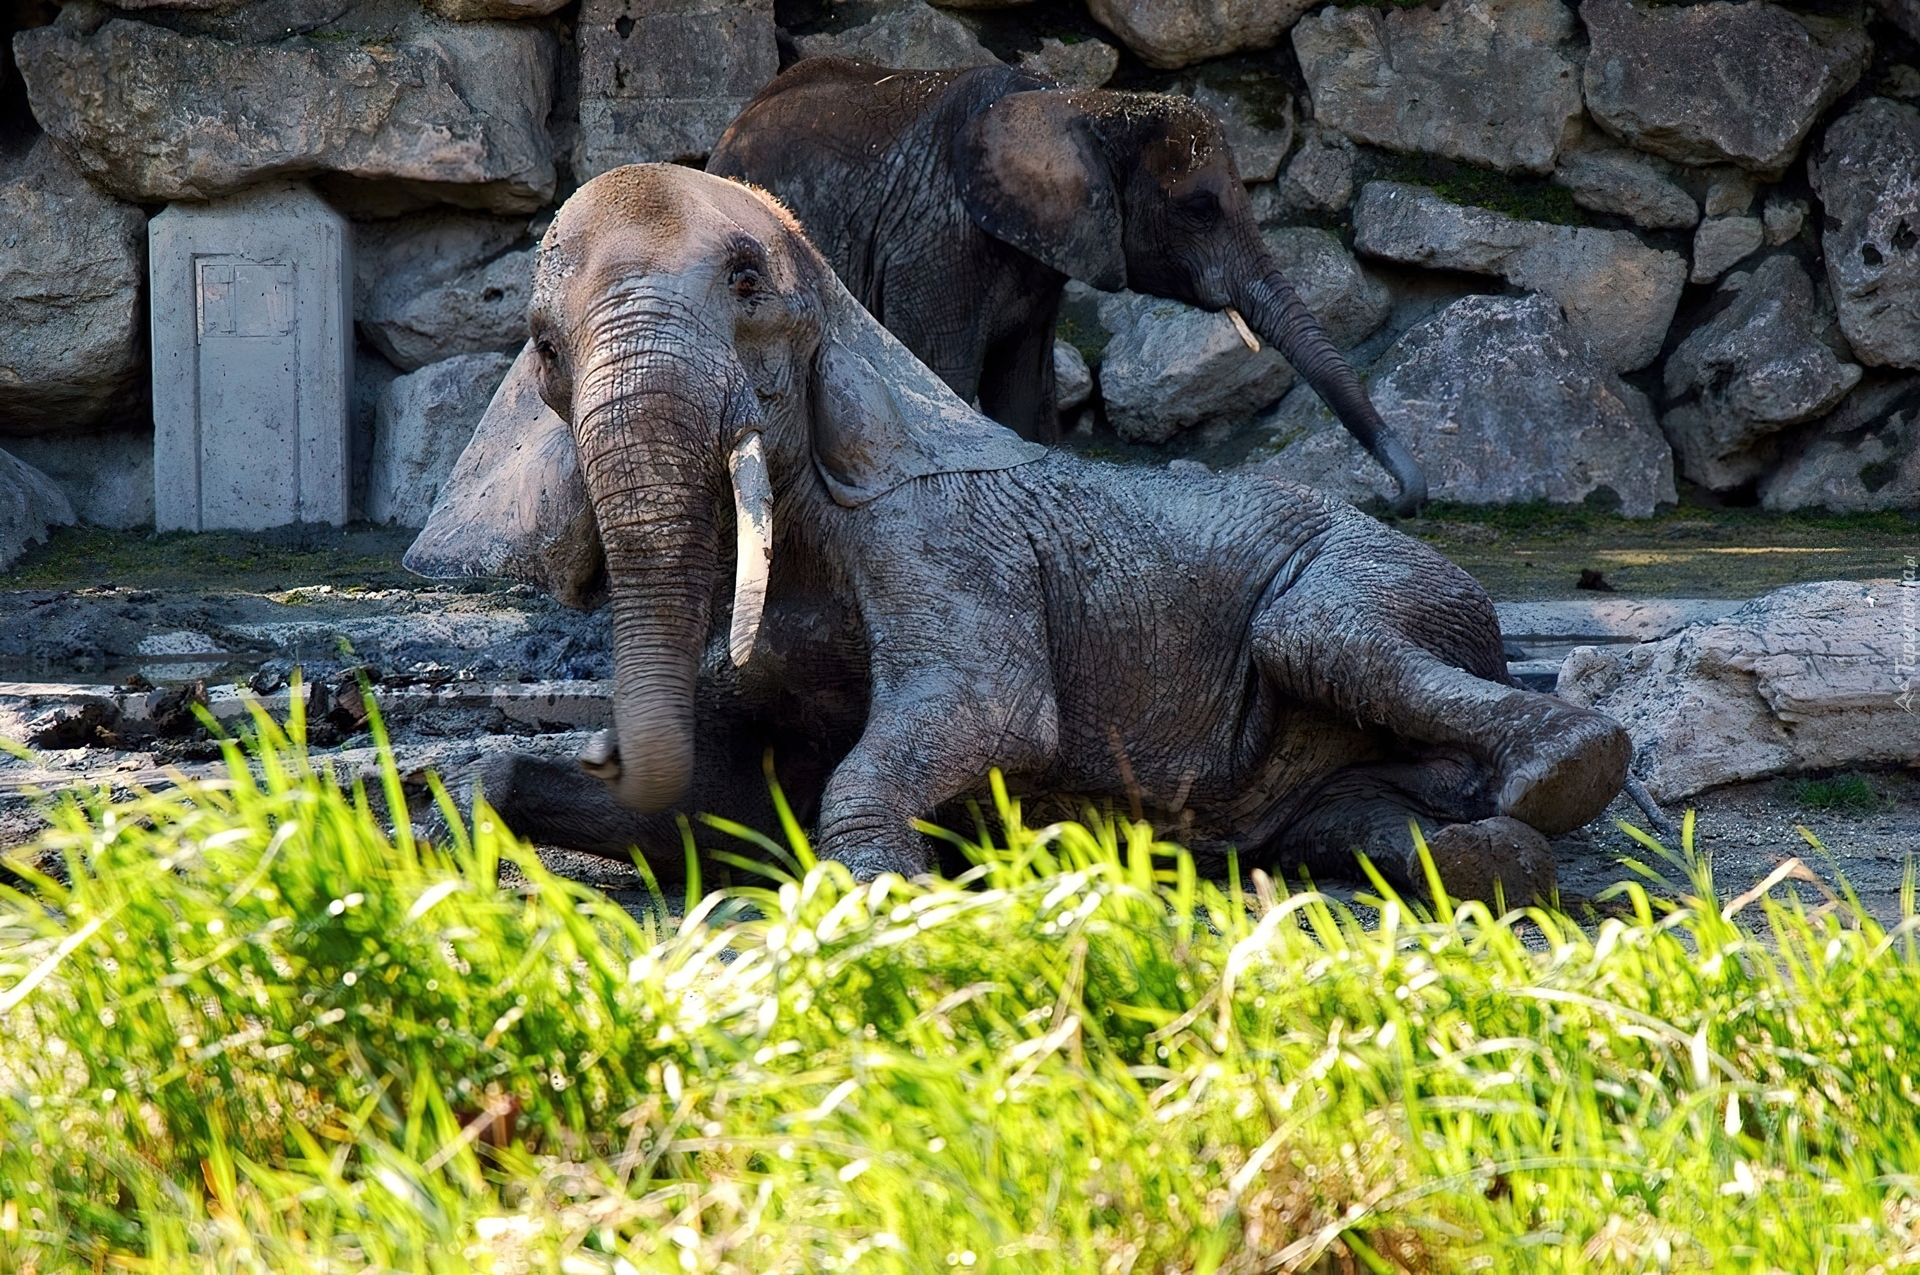 Słoń, Zoo